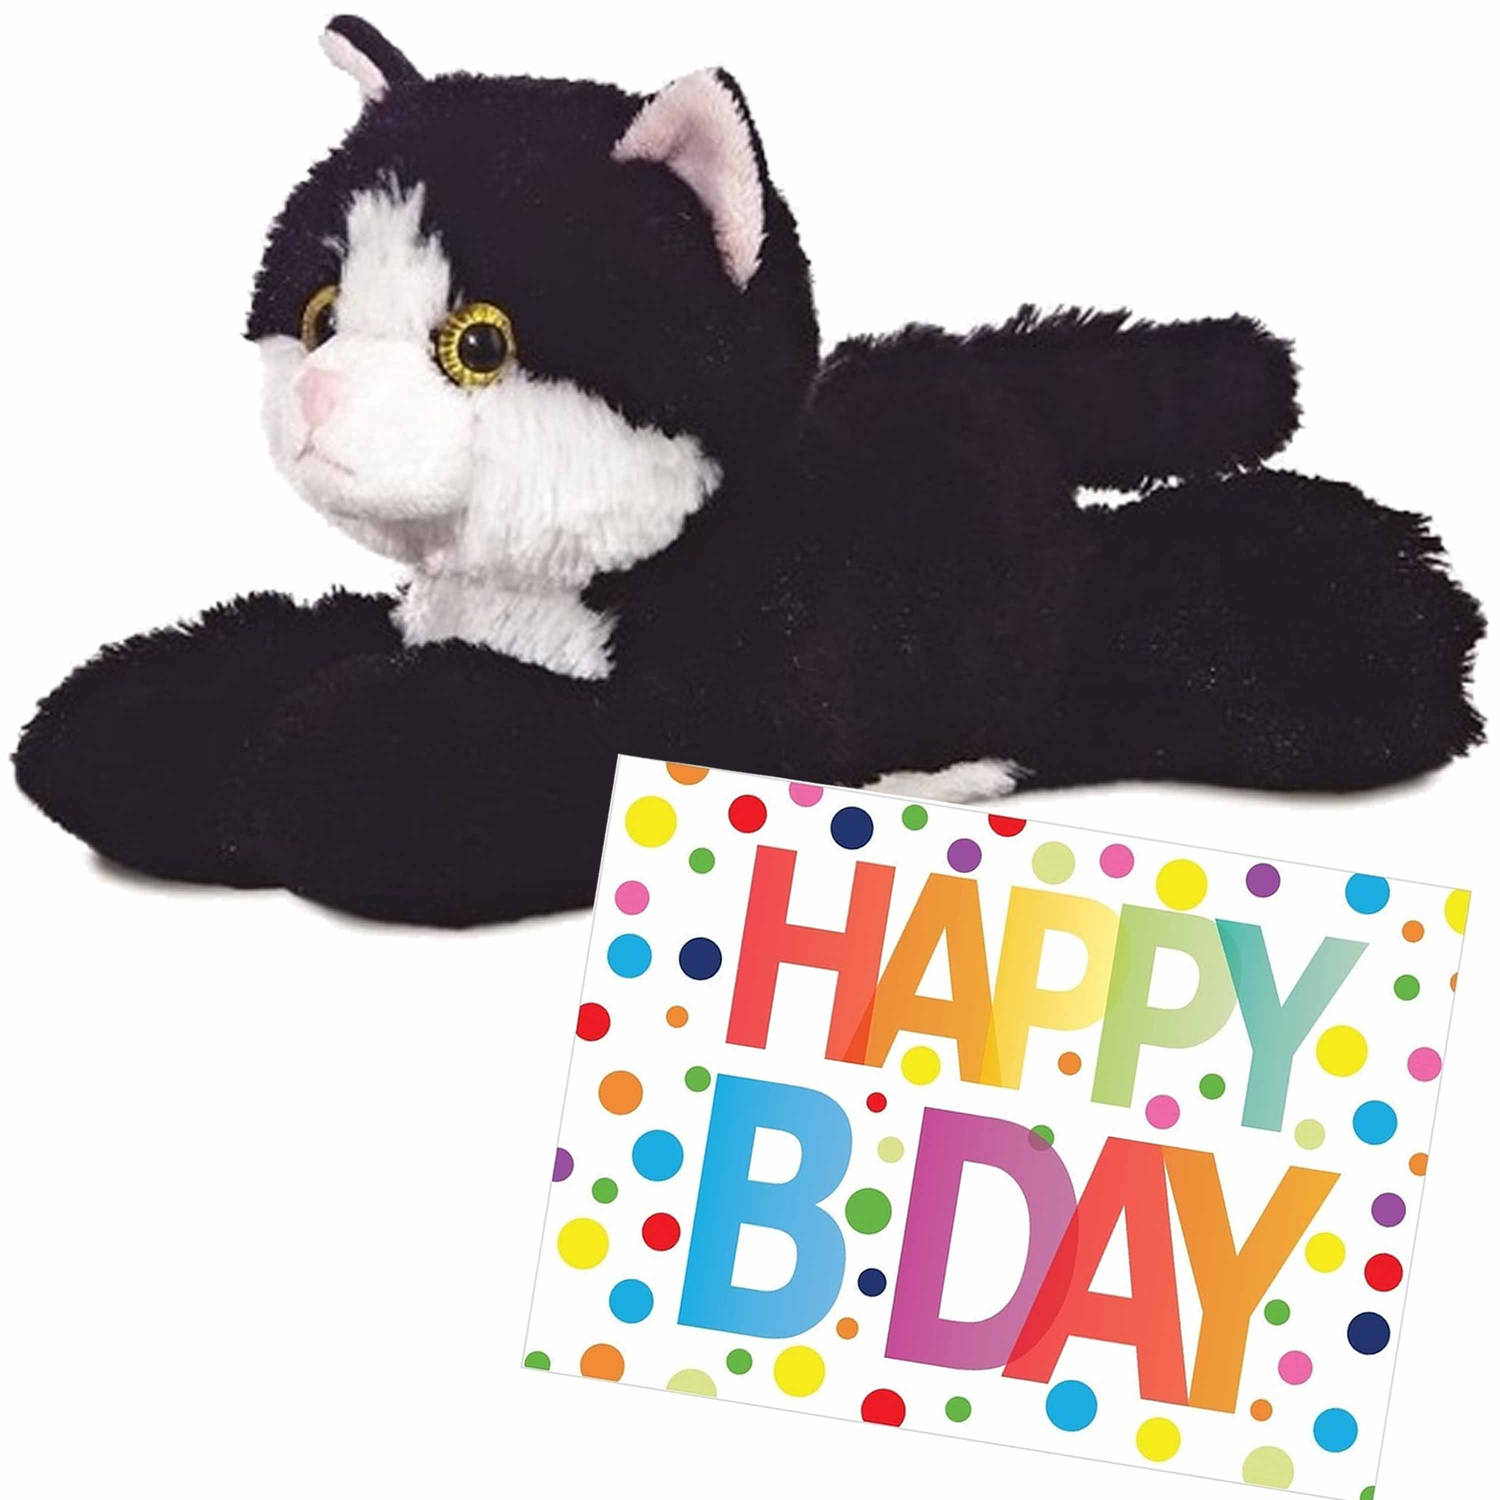 Pluche knuffel kat-poes zwart-witte 20 cm met A5-size Happy Birthday wenskaart Knuffel huisdieren